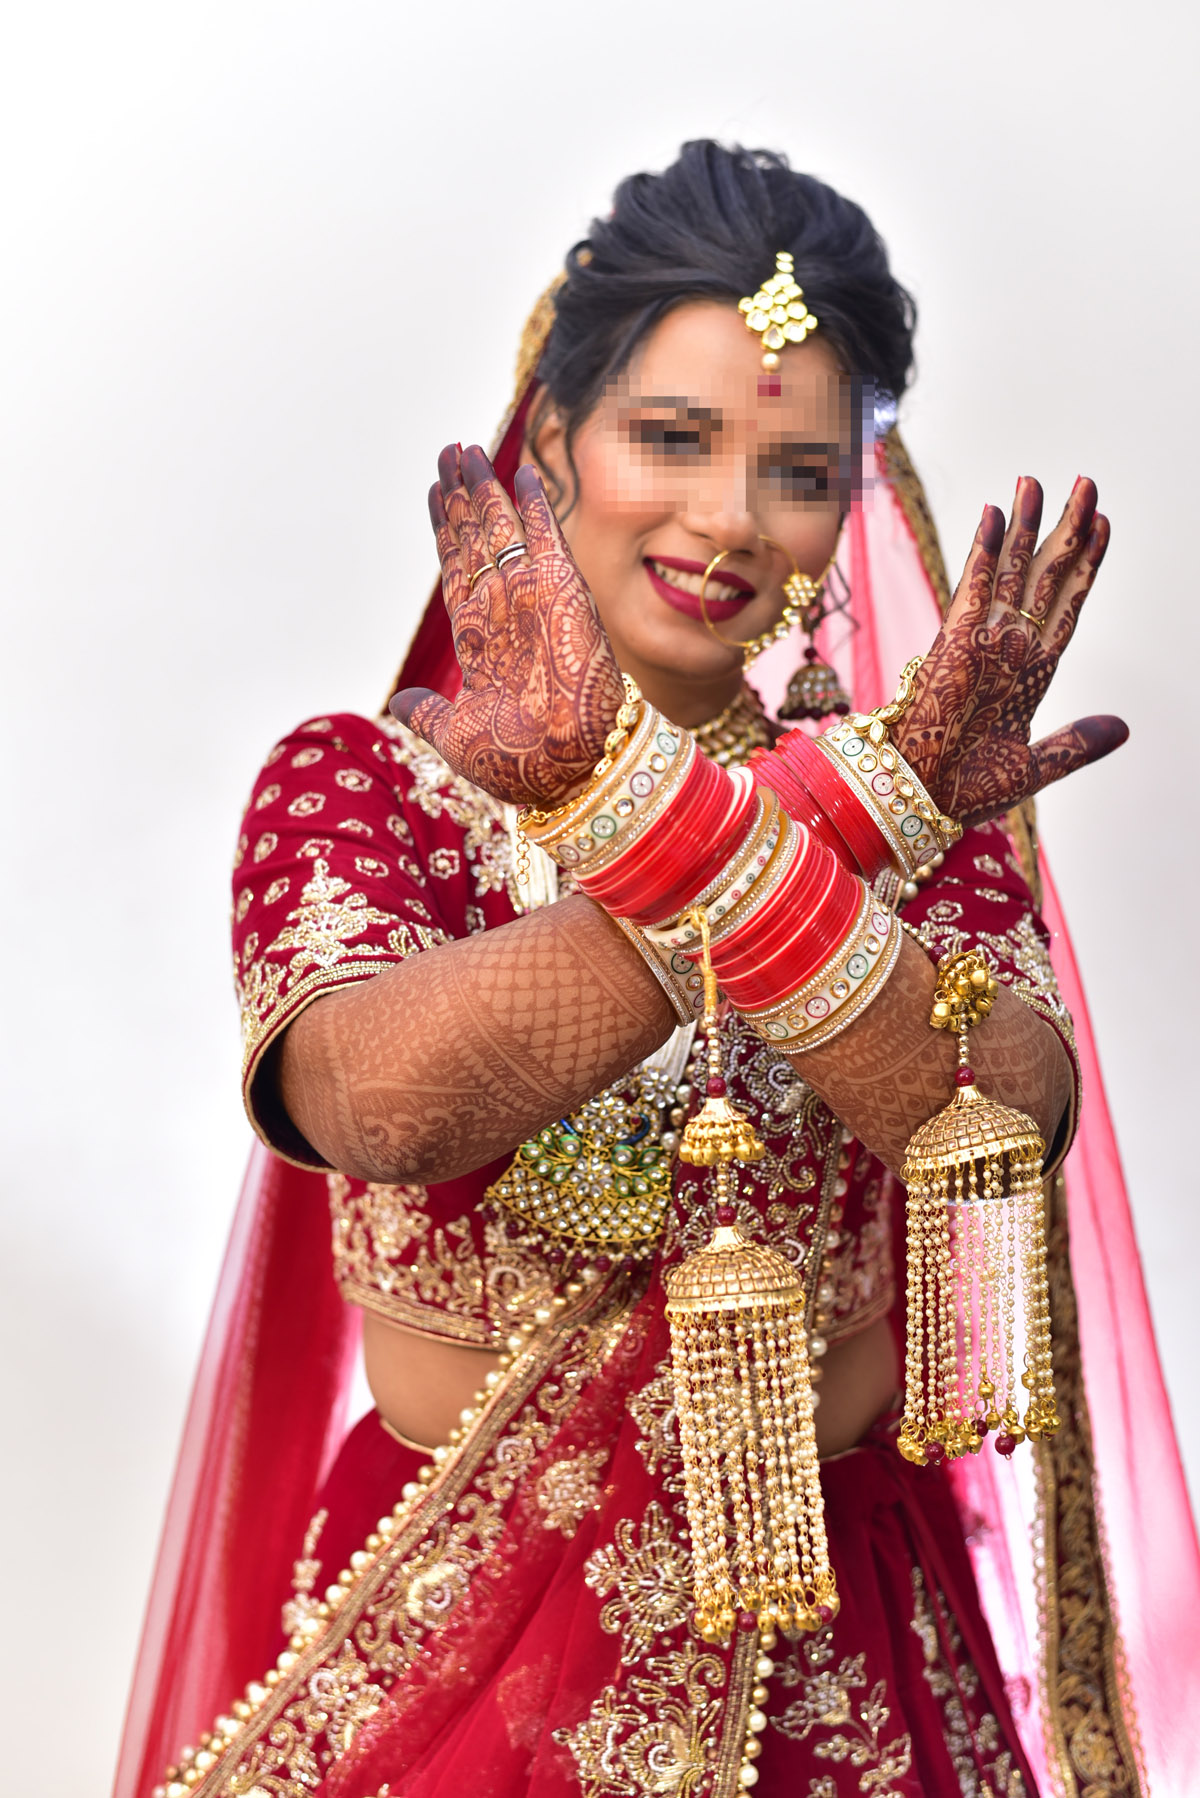 weddingphotography #bridalmakeup #bridetobe #portrait #traditional #dulhan  #indianbride #photography #poses #smilemakeover #indianbride | Instagram